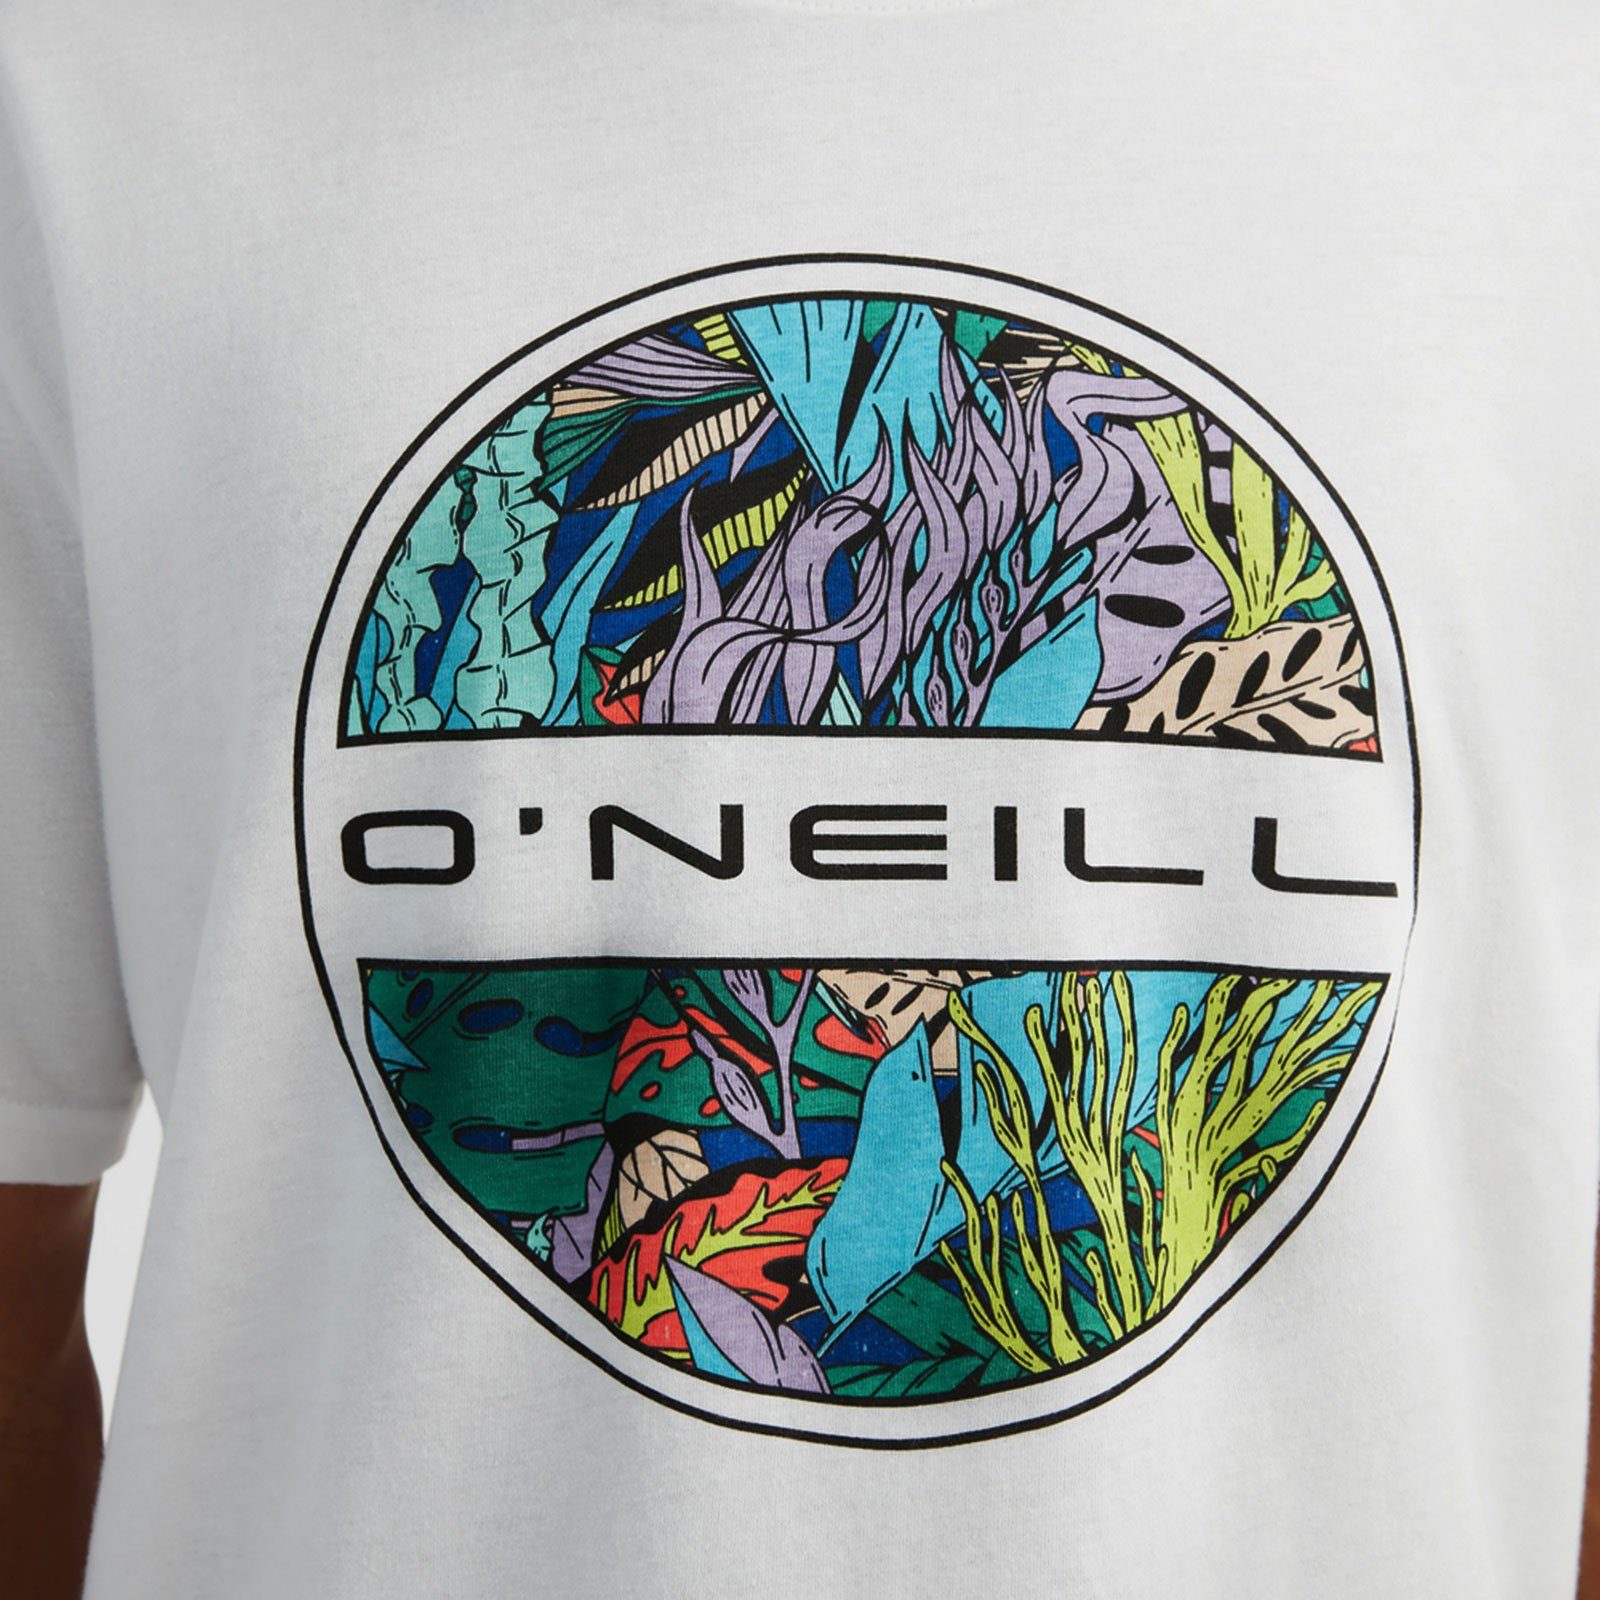 O'Neill T-Shirt Seareef snow mit 11010 Meeresflora-Print Logo kreisförmigem white und